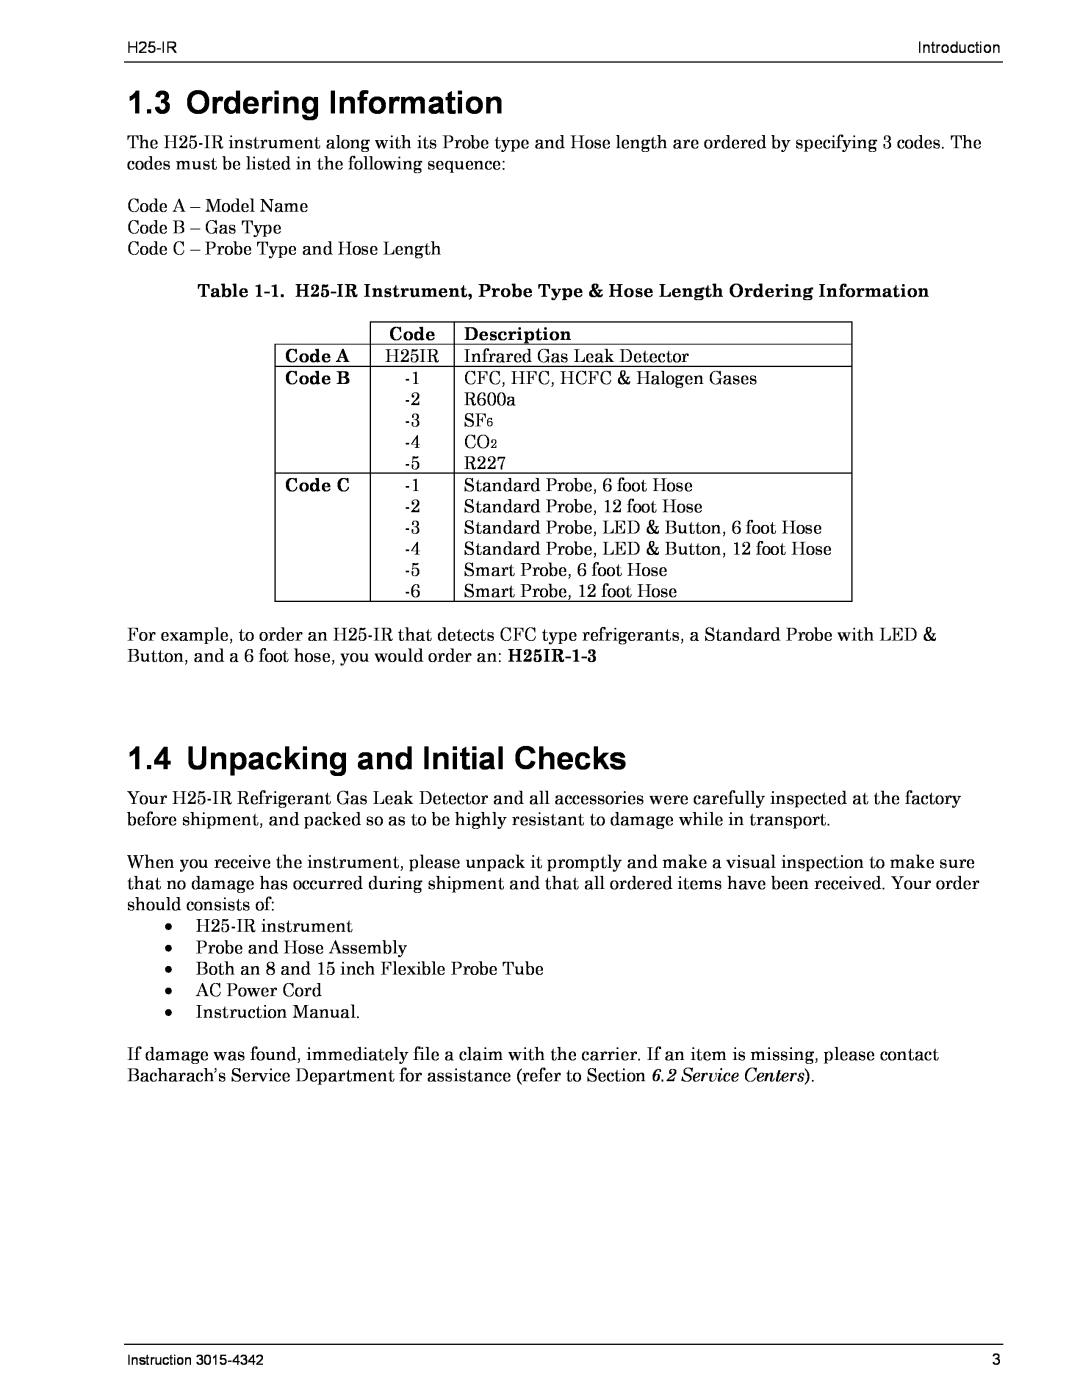 Bacharach H25-IR manual Ordering Information, Unpacking and Initial Checks, Description, Code A, Code B, Code C 